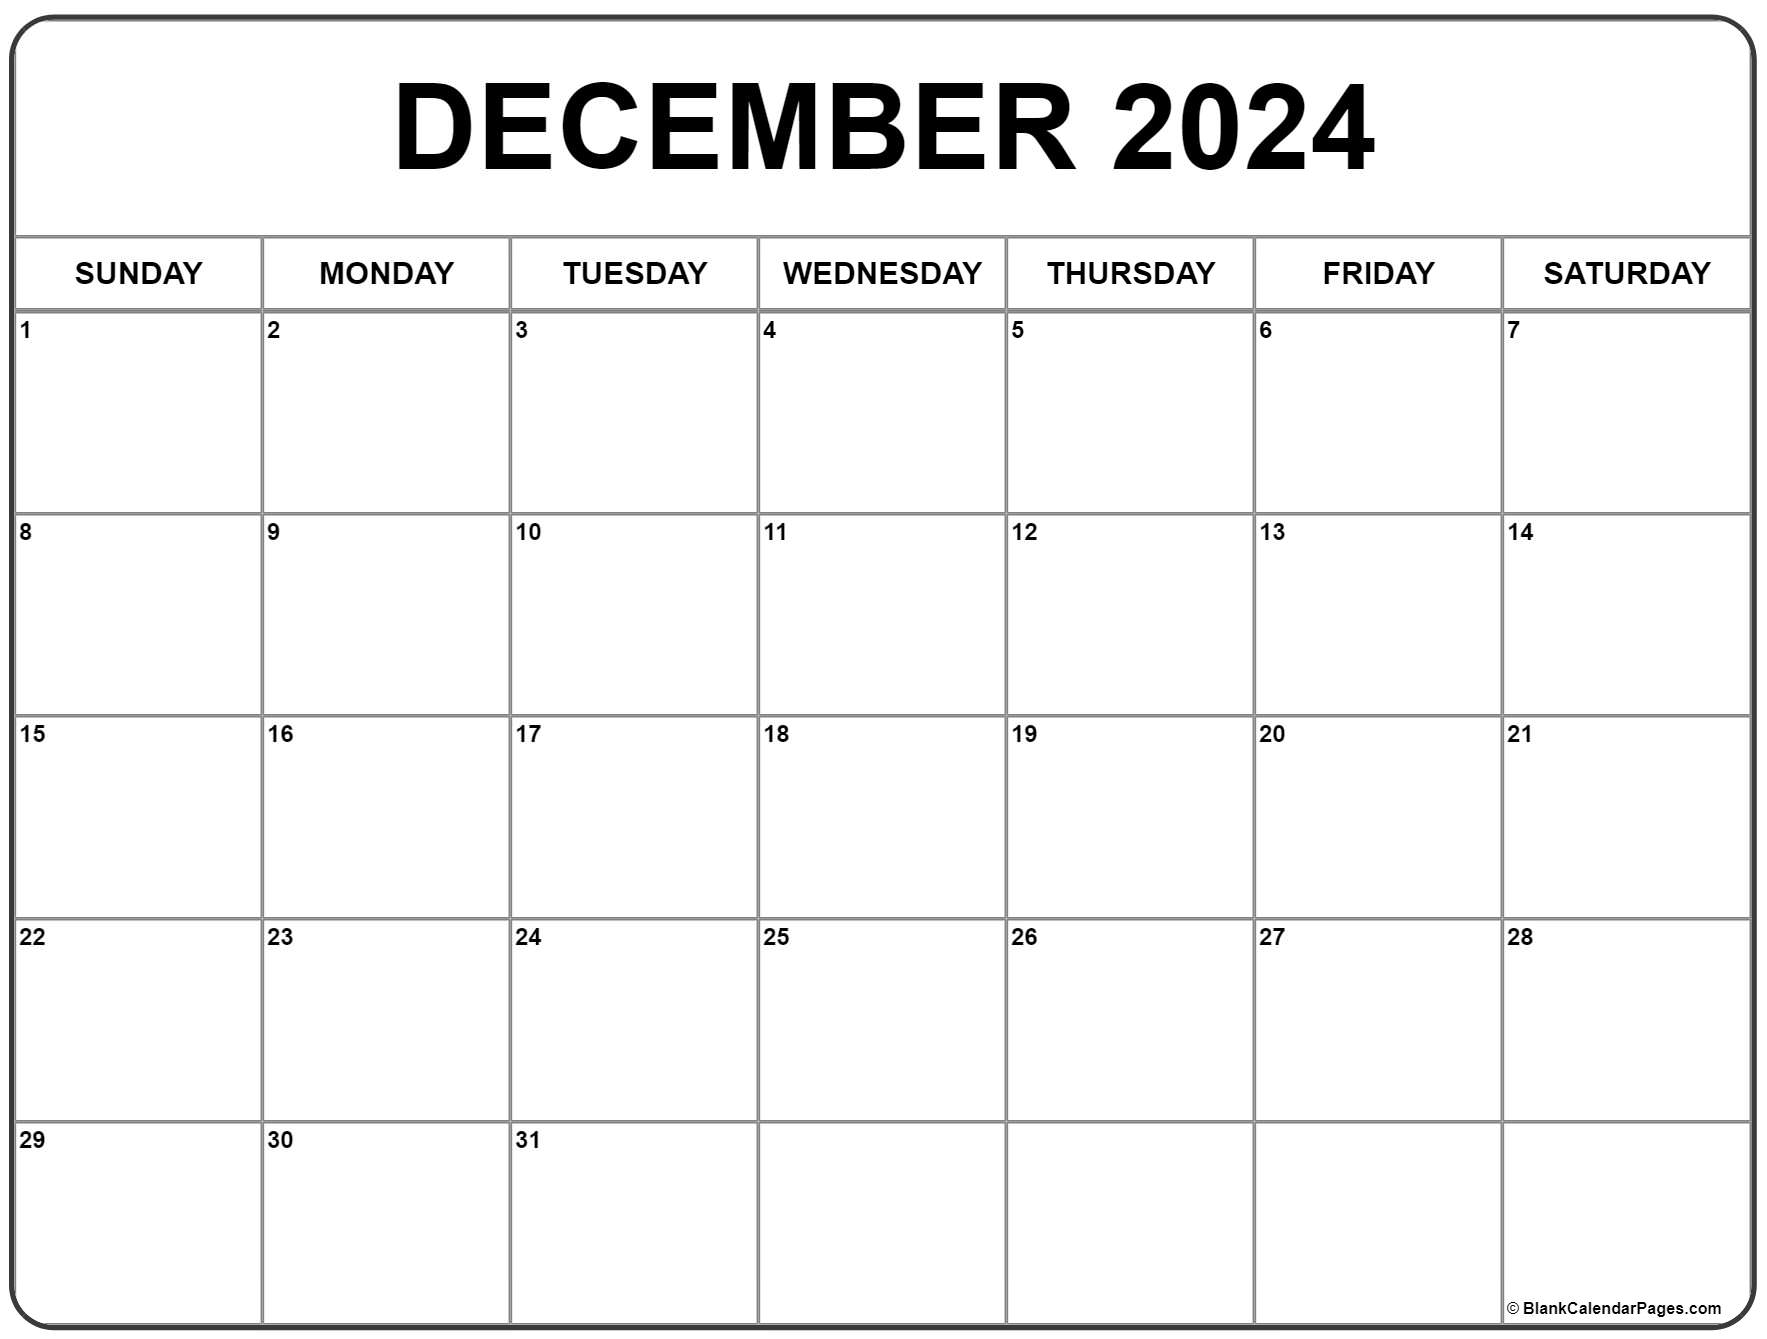 December Calendar Template 2022 December 2022 Calendar | Free Printable Calendar Templates